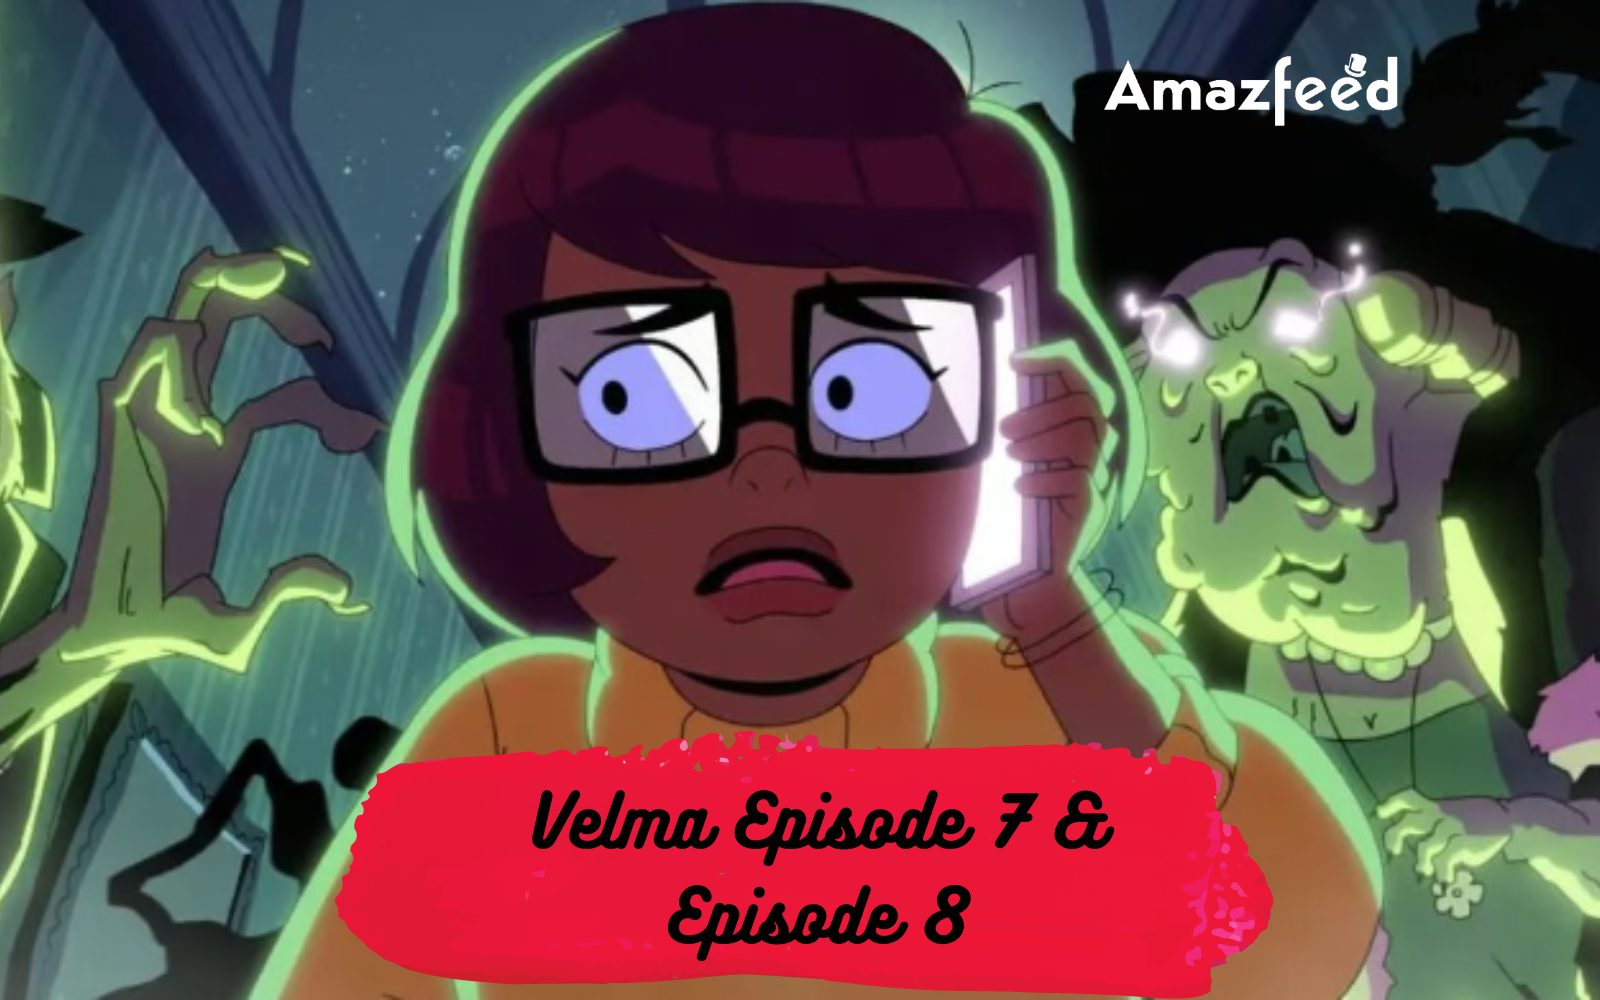 Velma Episode 7 & 8: Release Date, Time & Streaming Guide - OtakuKart